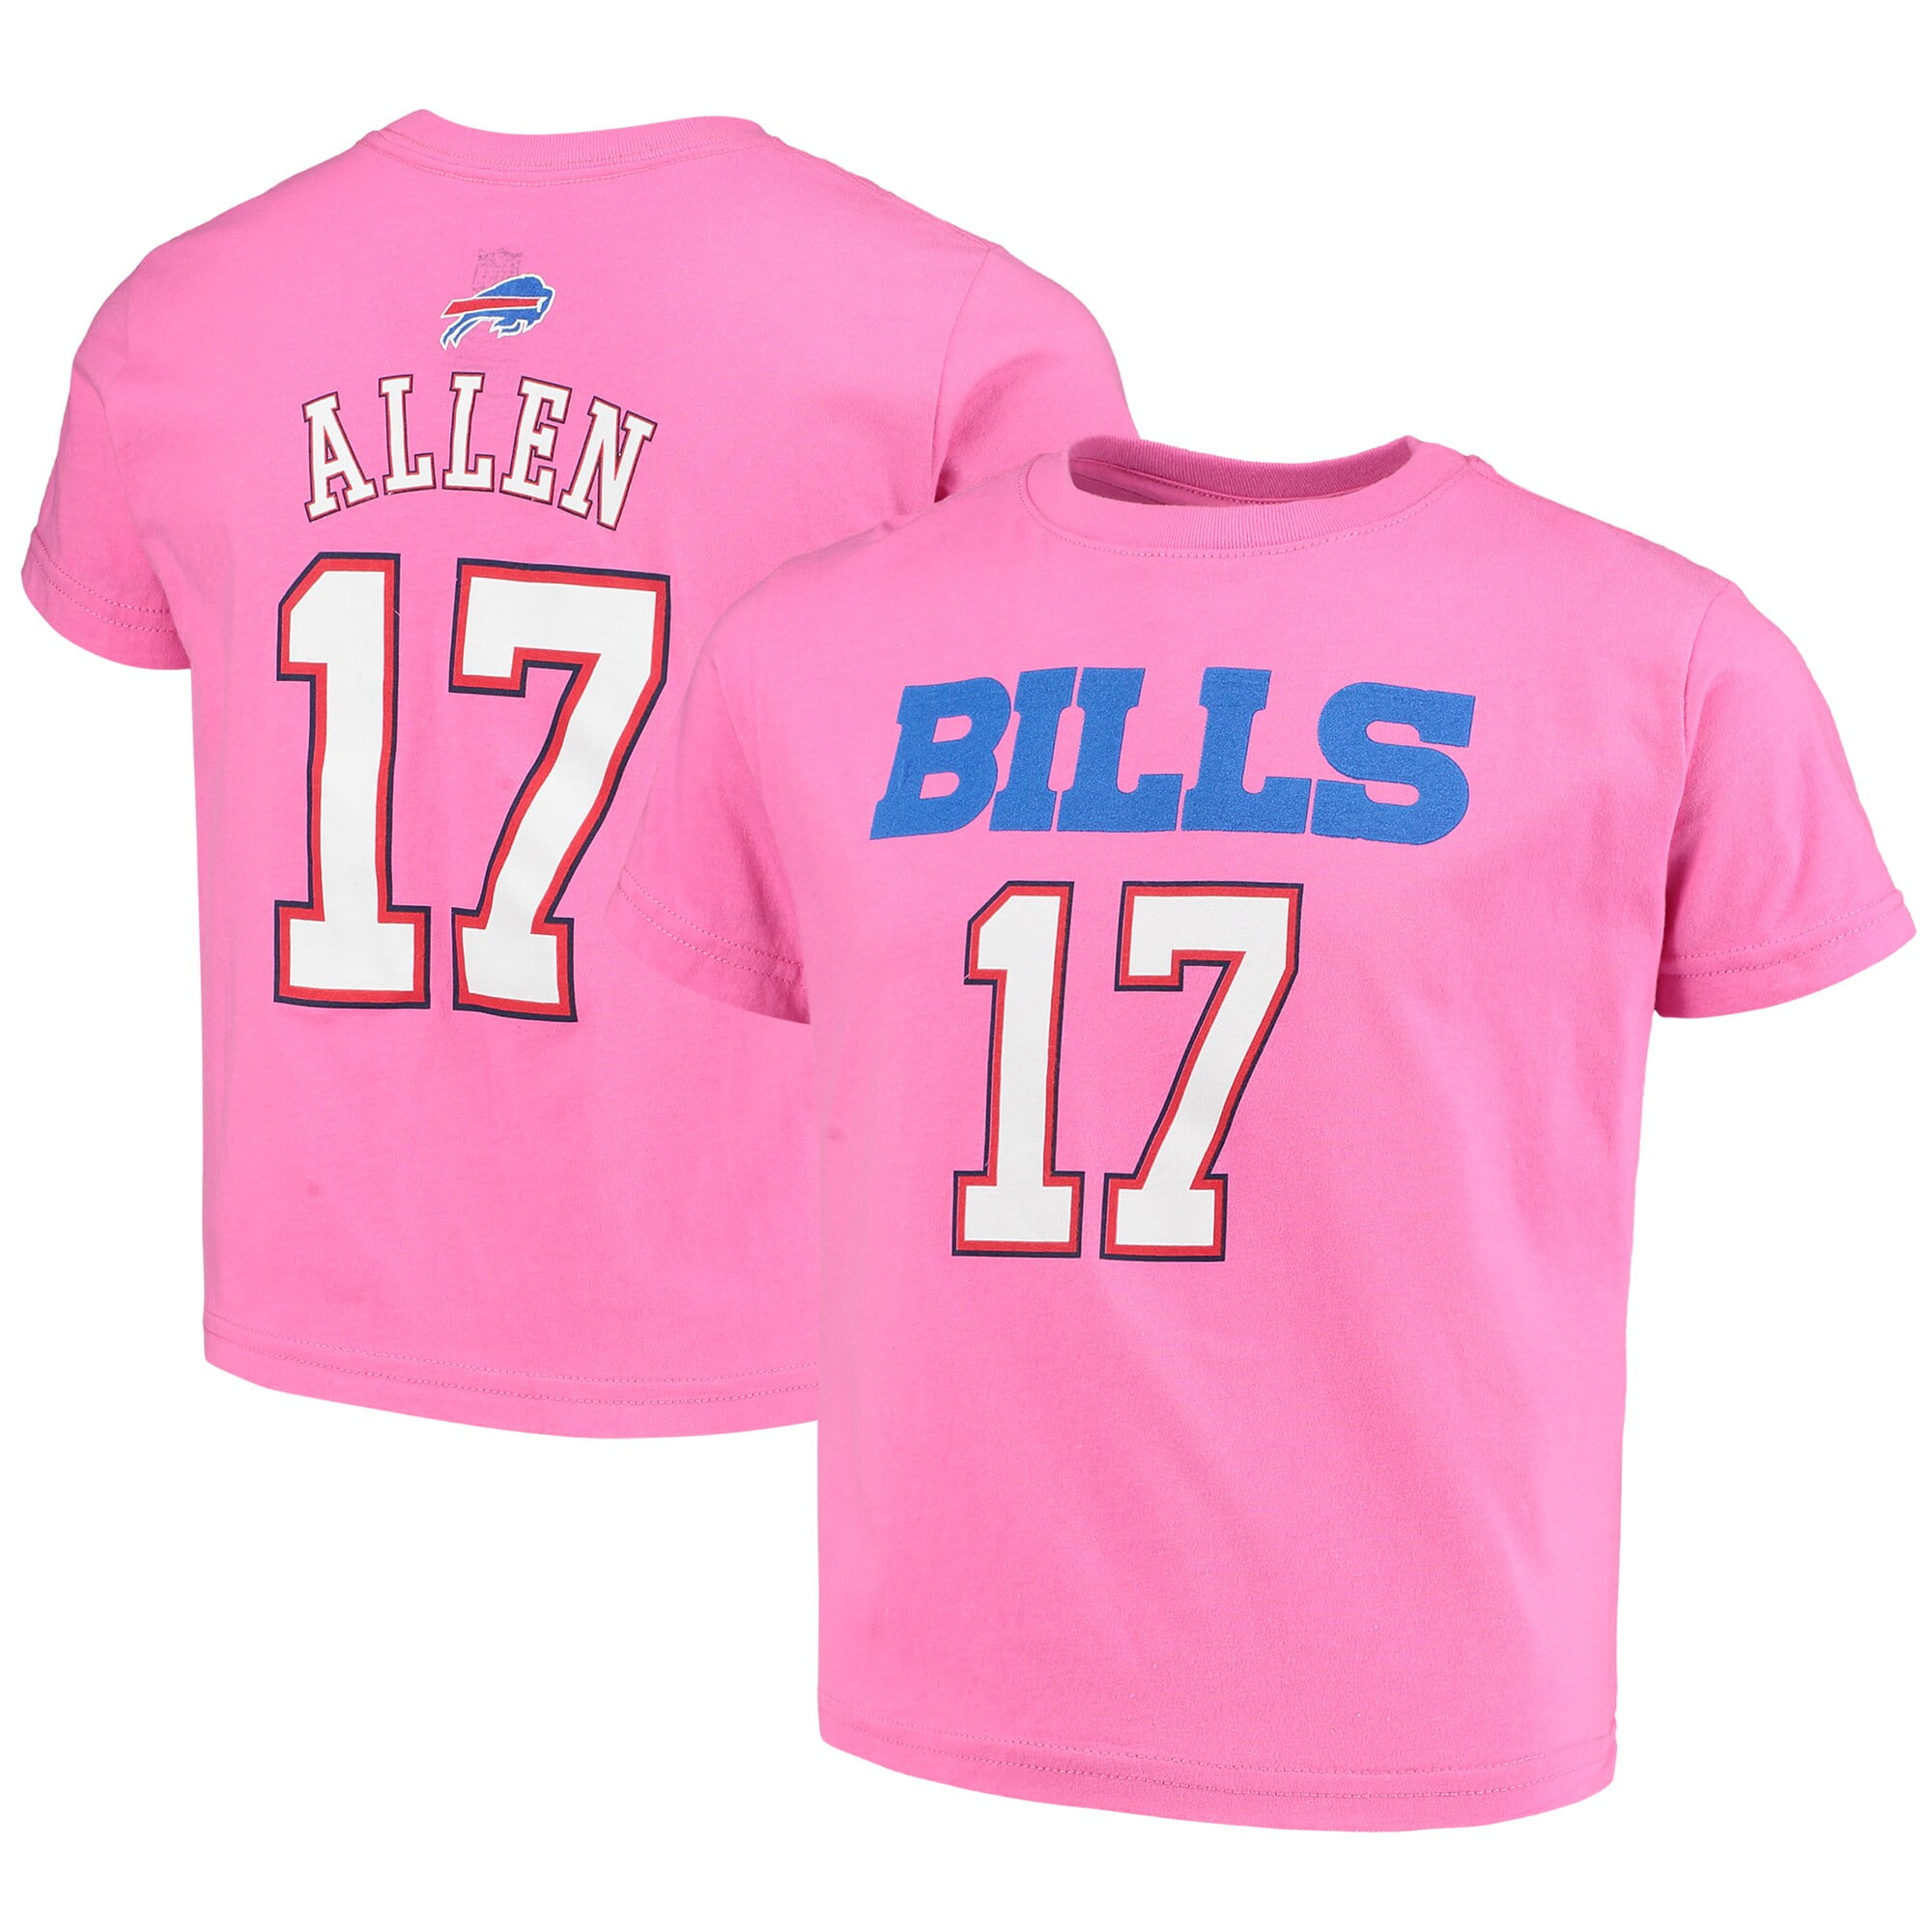 buffalo bills girls jersey